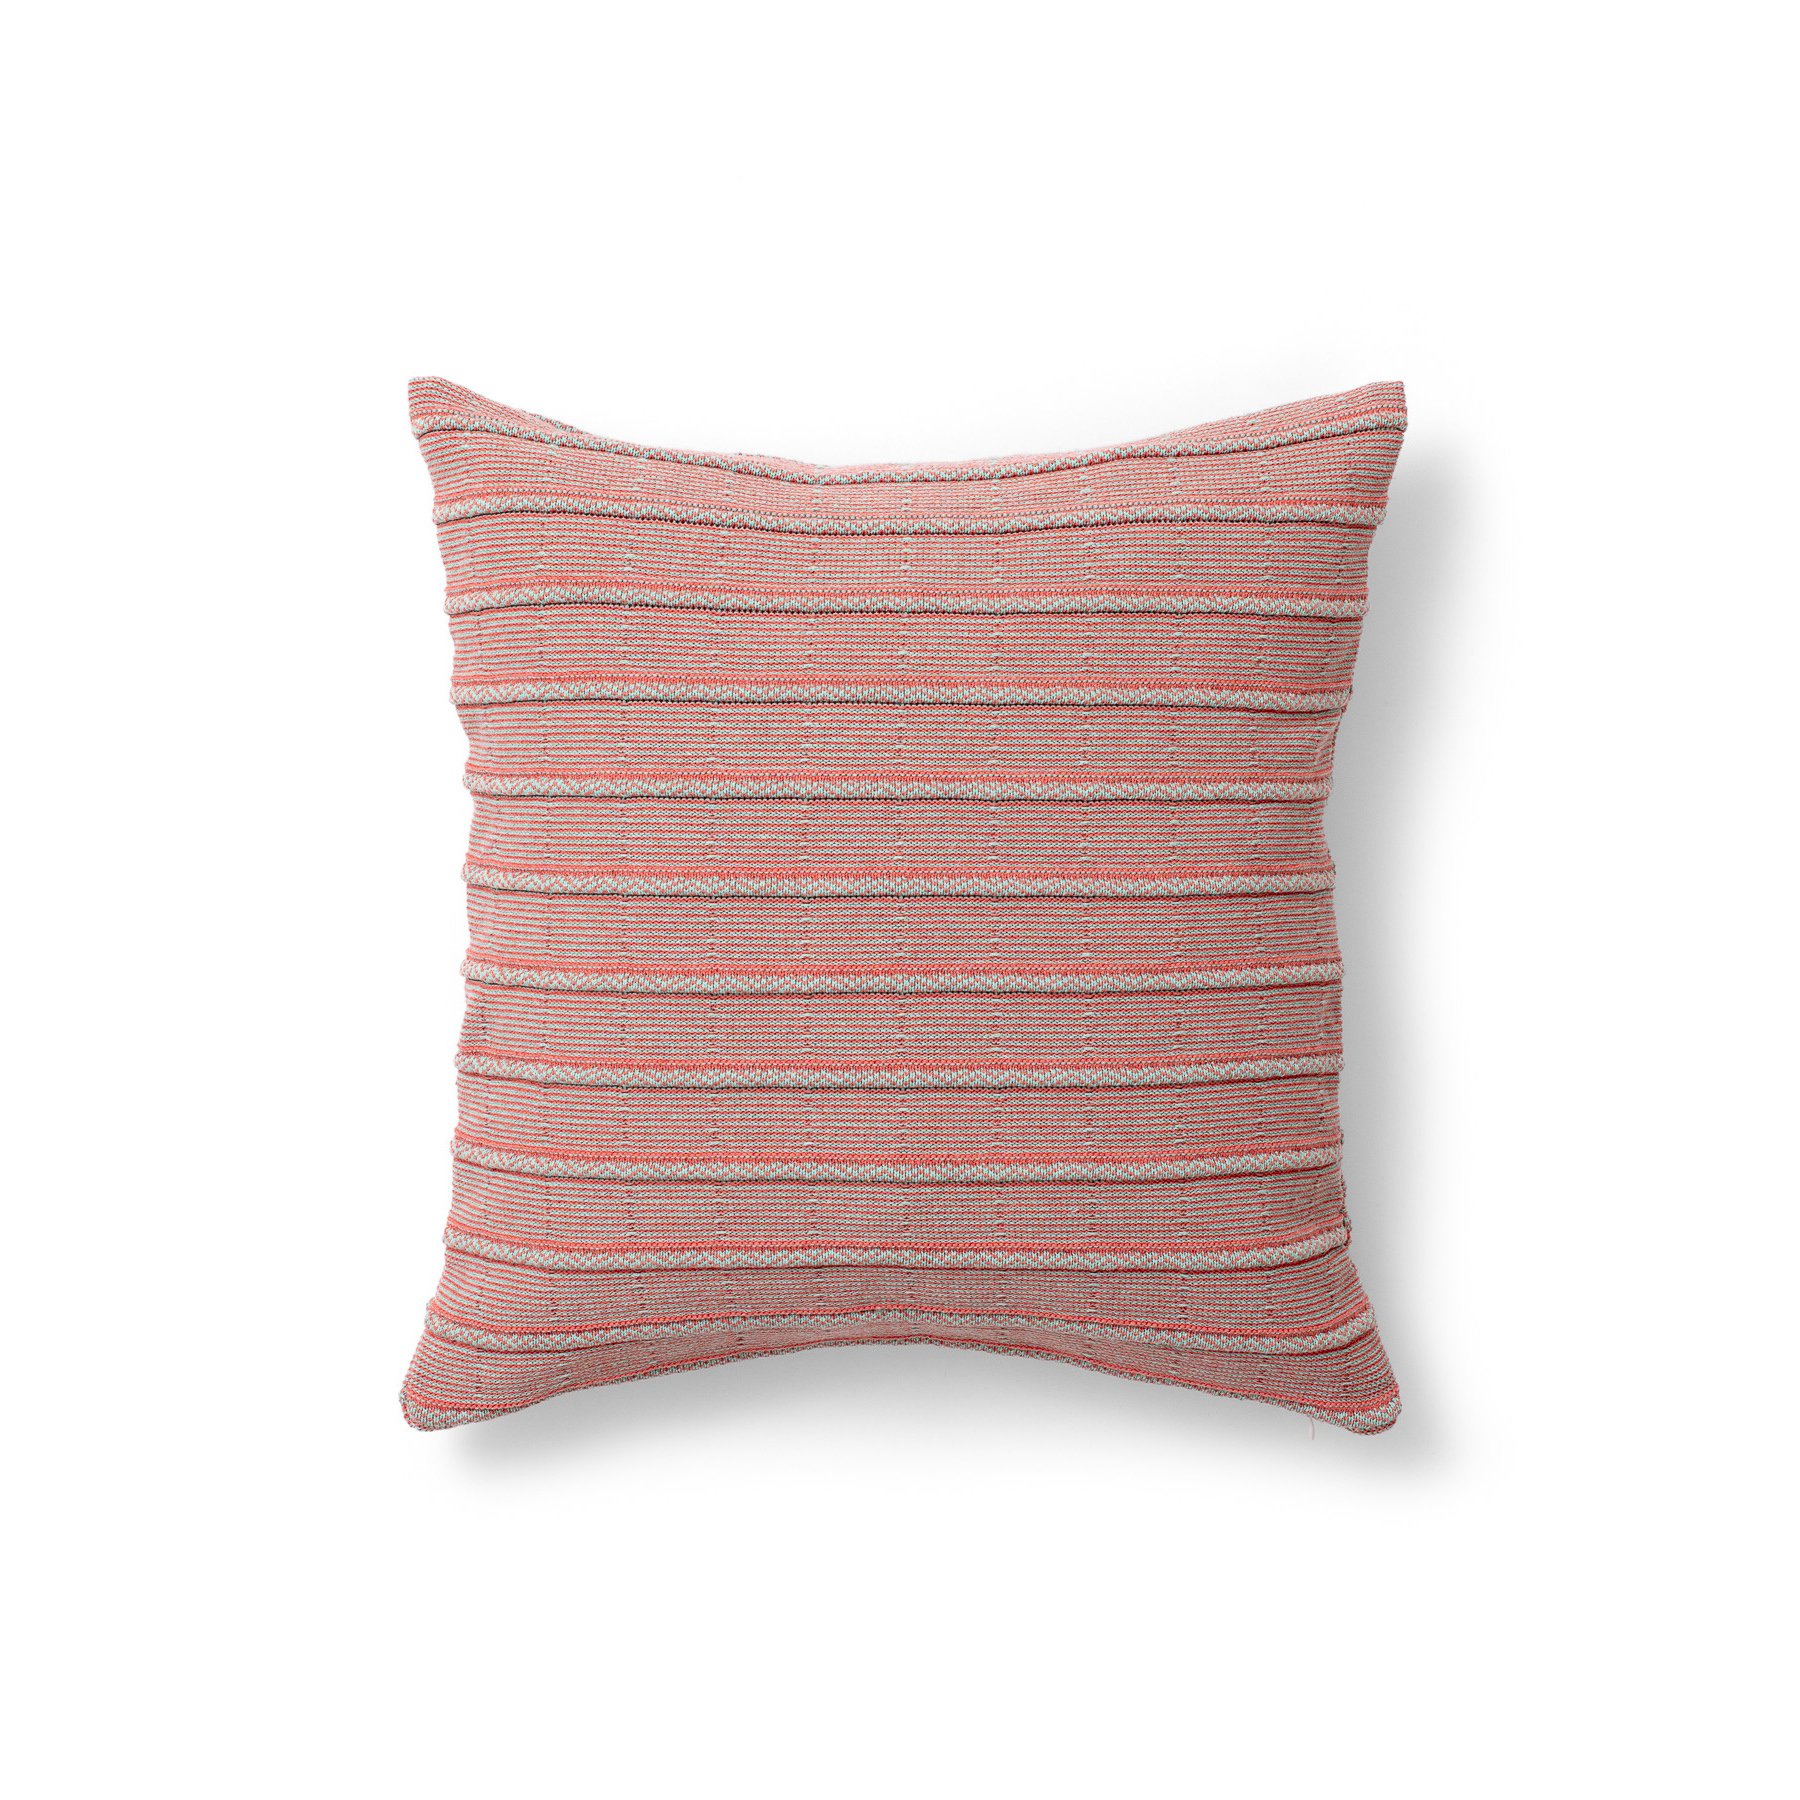 18x18" rolled texture pillow | verde acqua + corallo